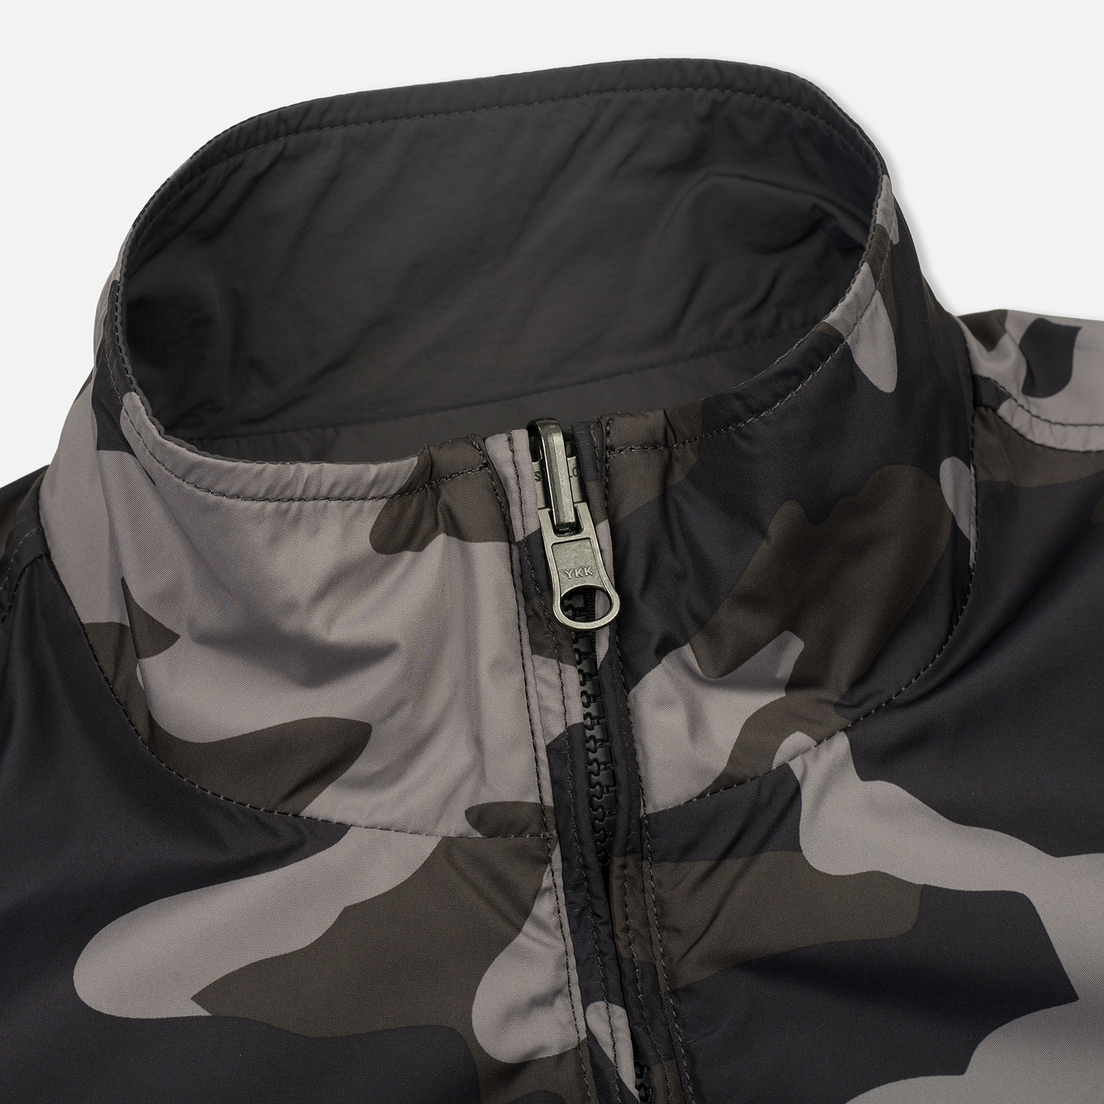 Woolrich Мужская куртка Reversible Camouflage